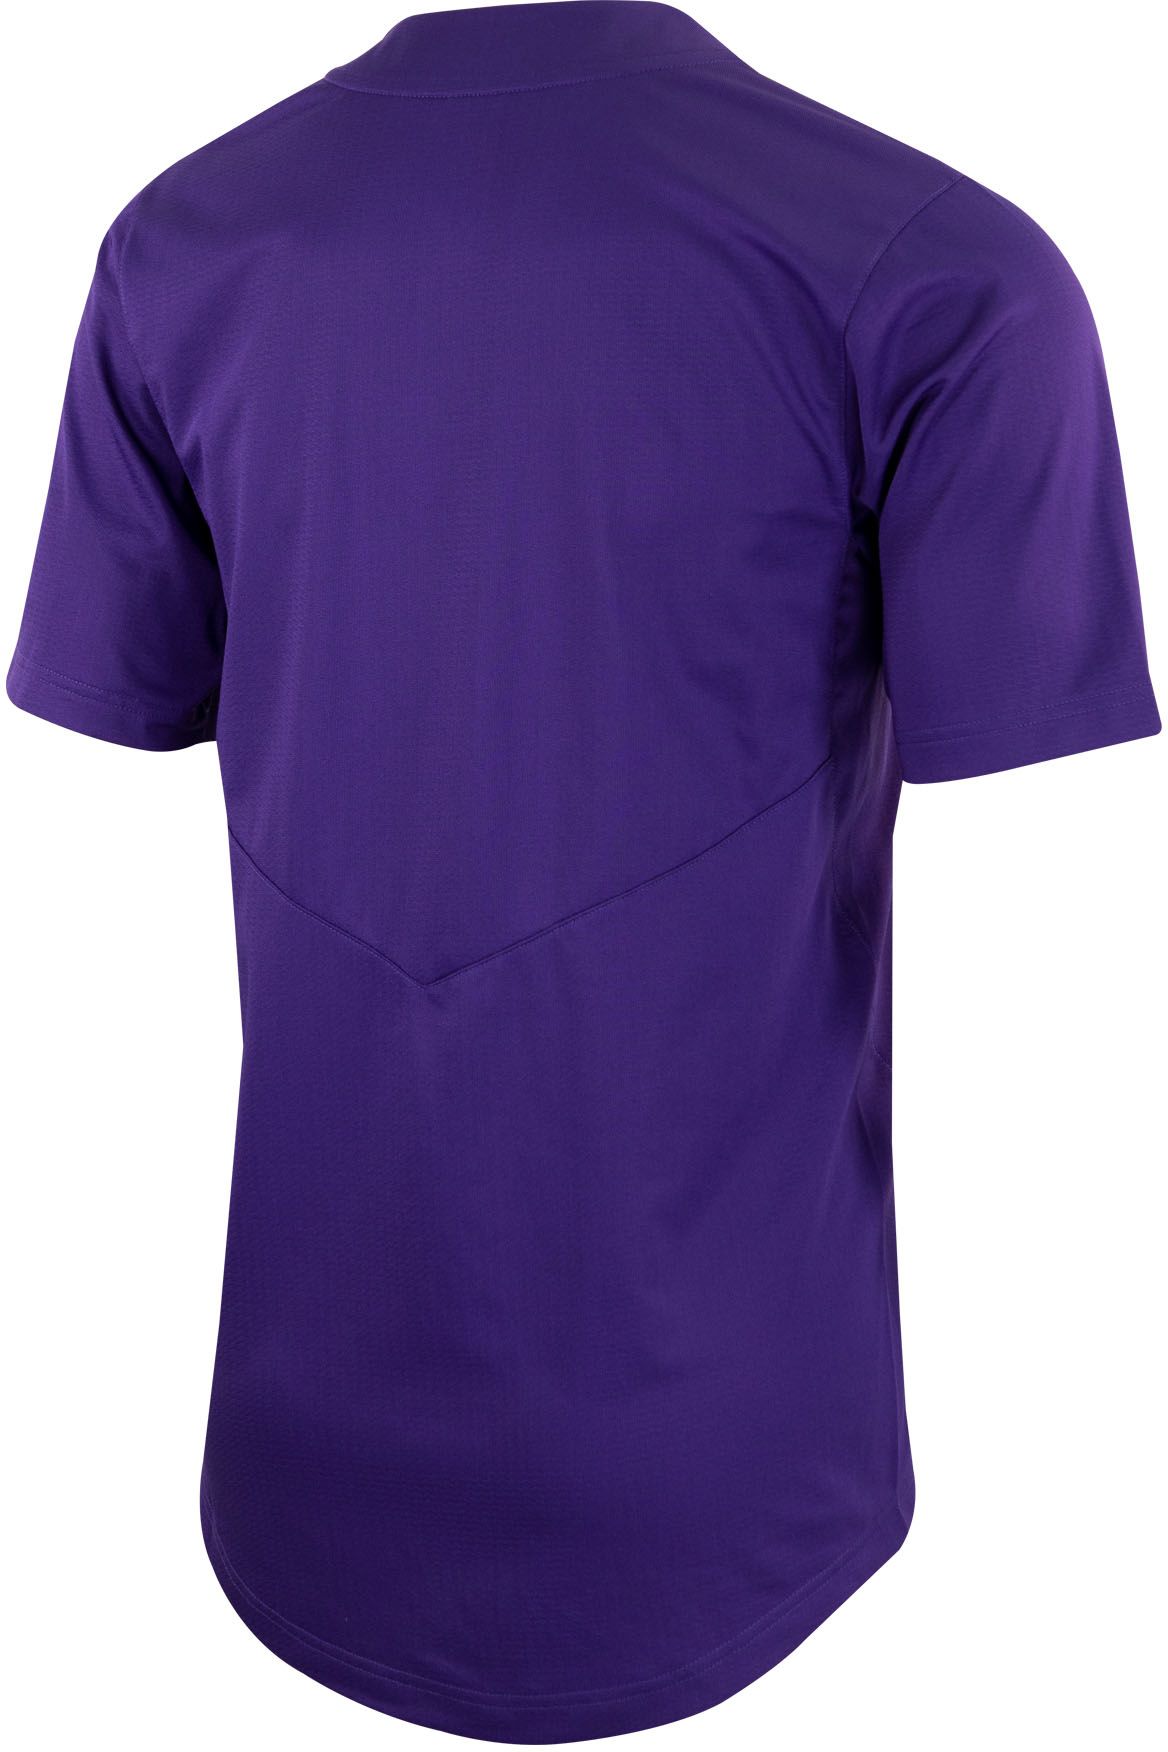 Nike LSU Tigers Purple Two Button Replica Softball Jersey